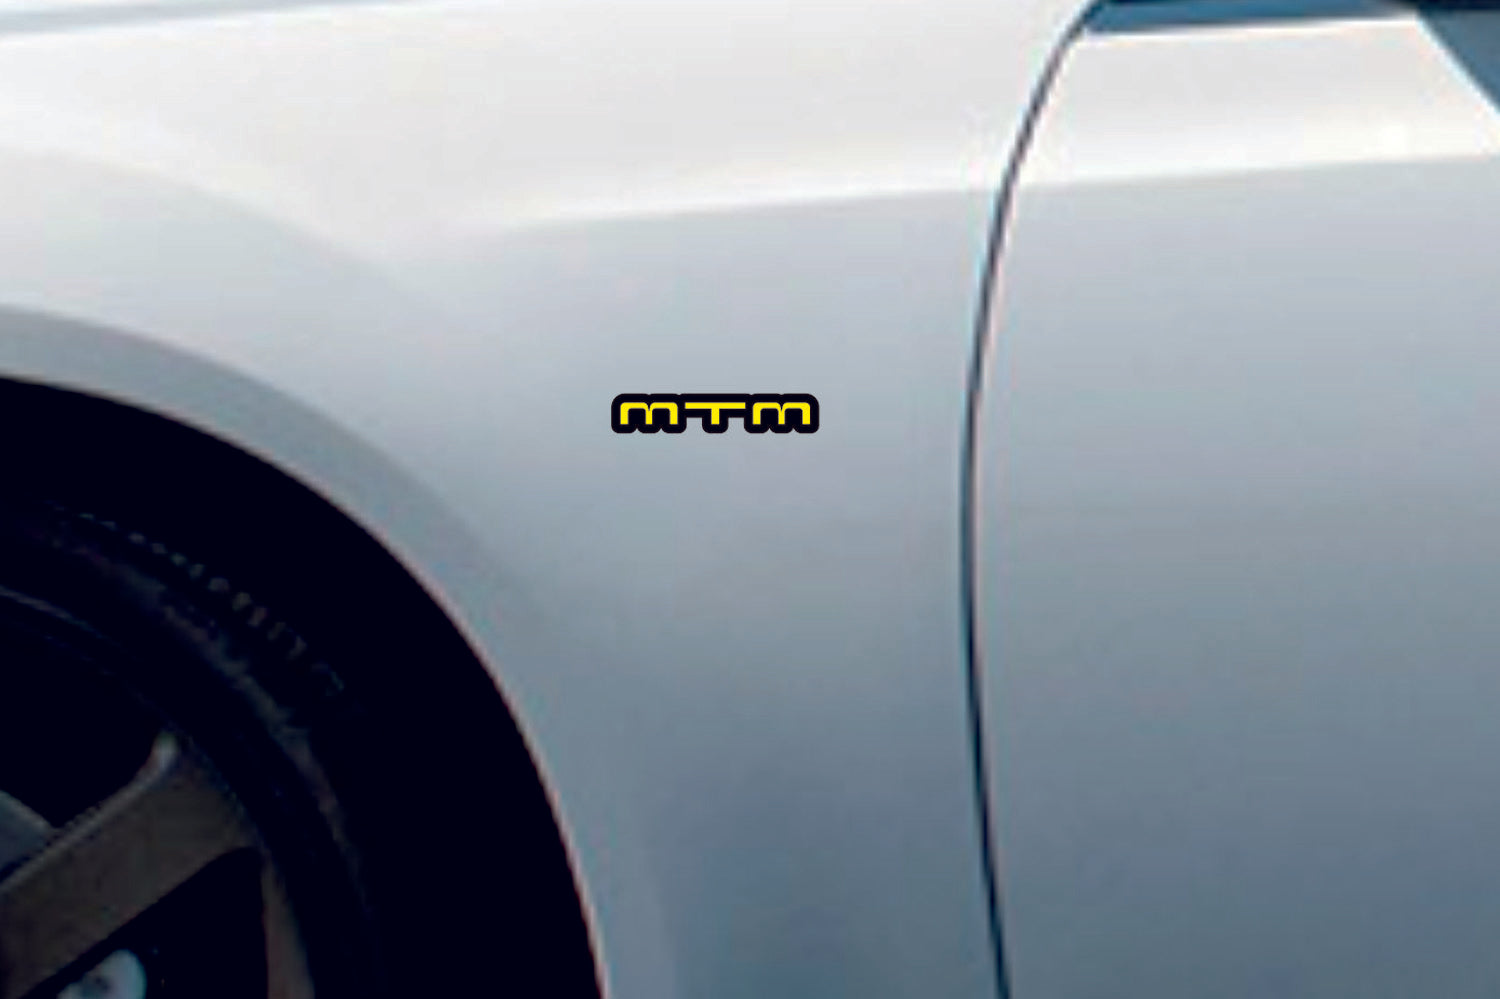 Audi emblem for fenders with MTM logo - decoinfabric